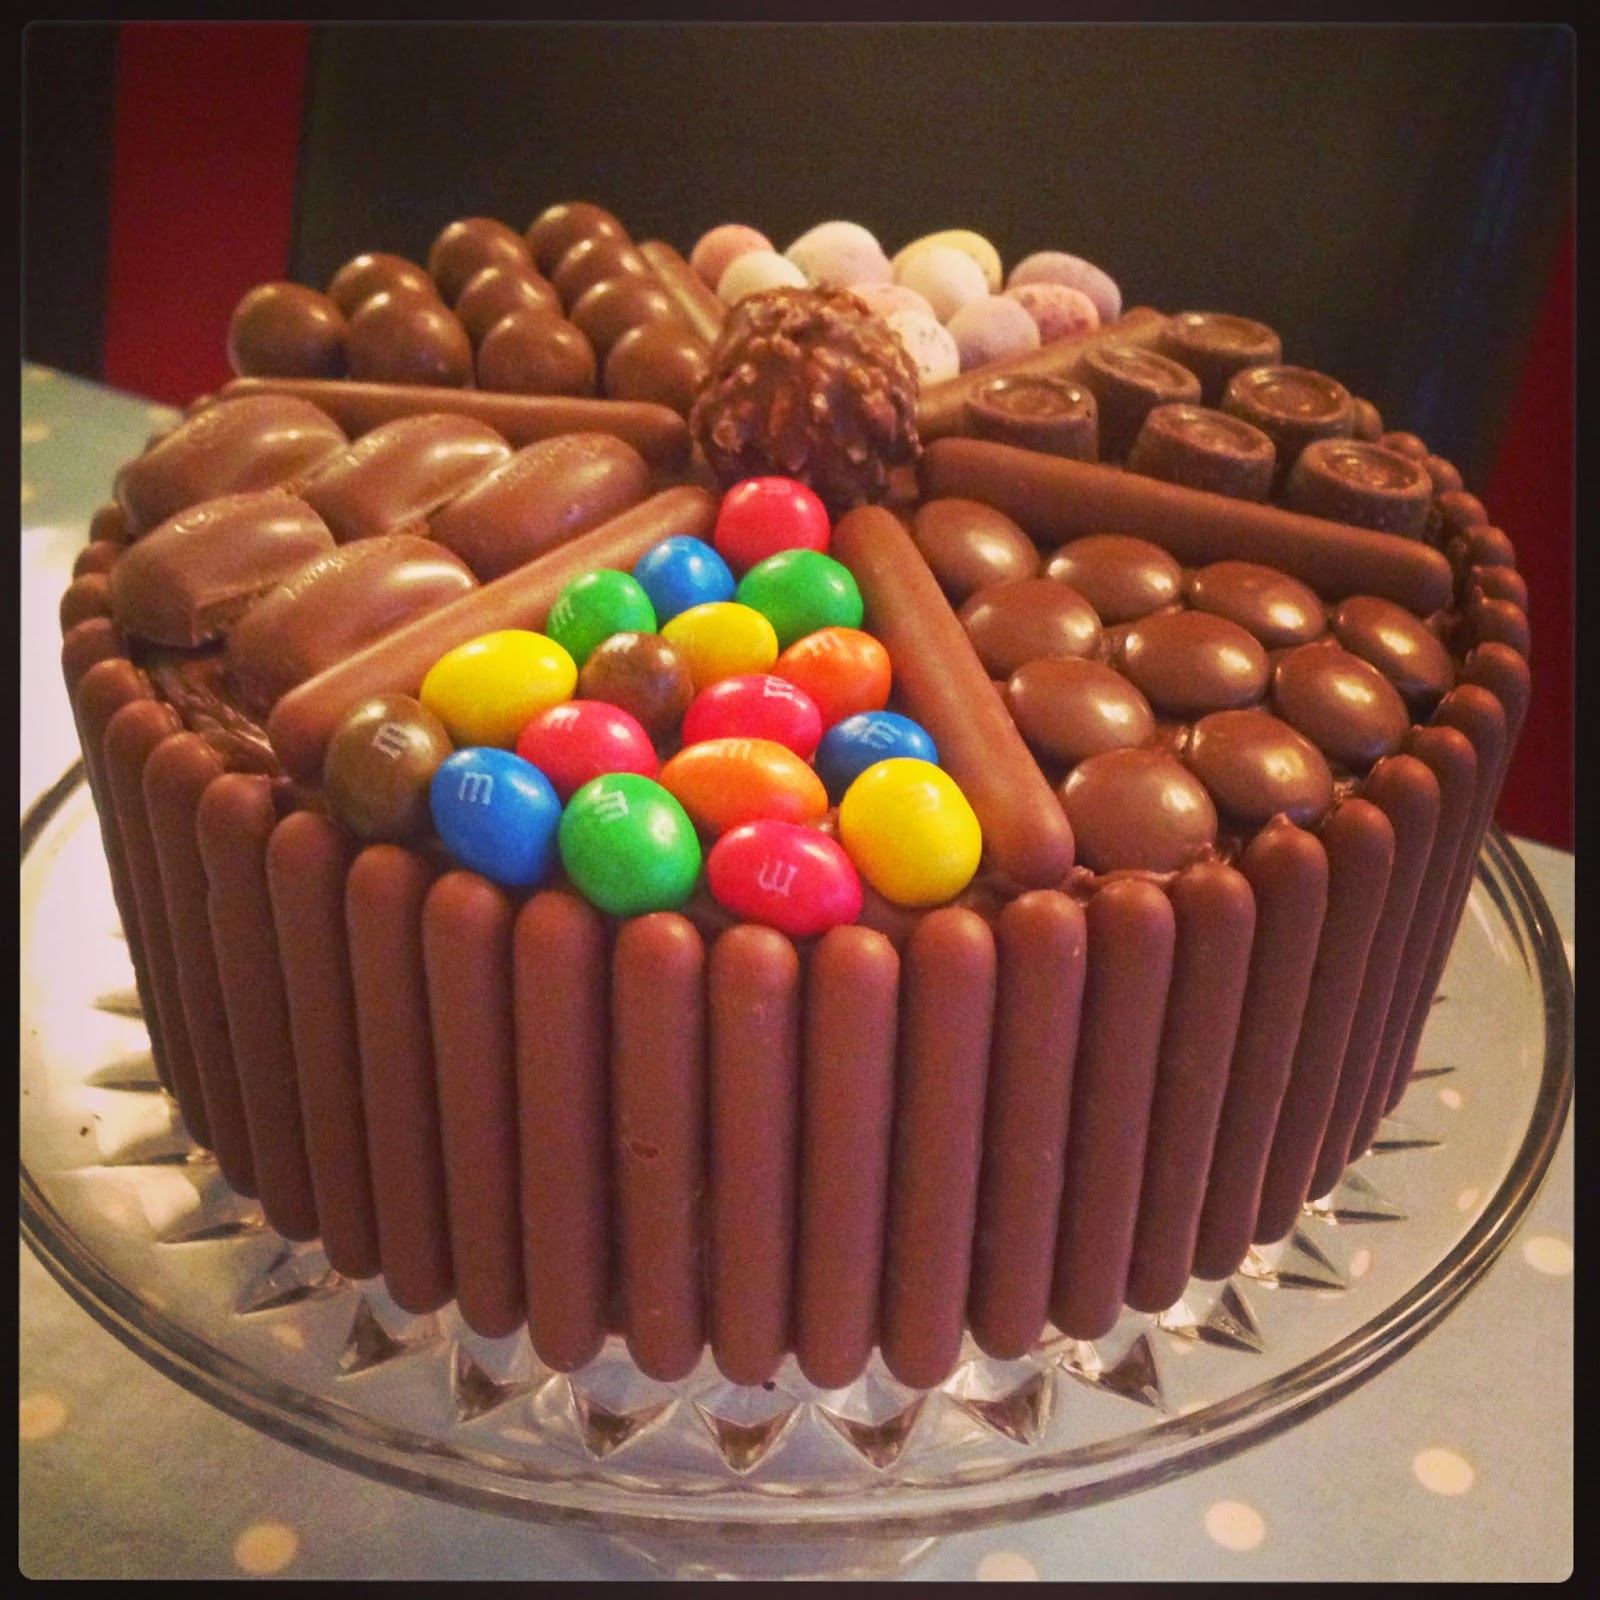 Best Ever Chocolate Cake